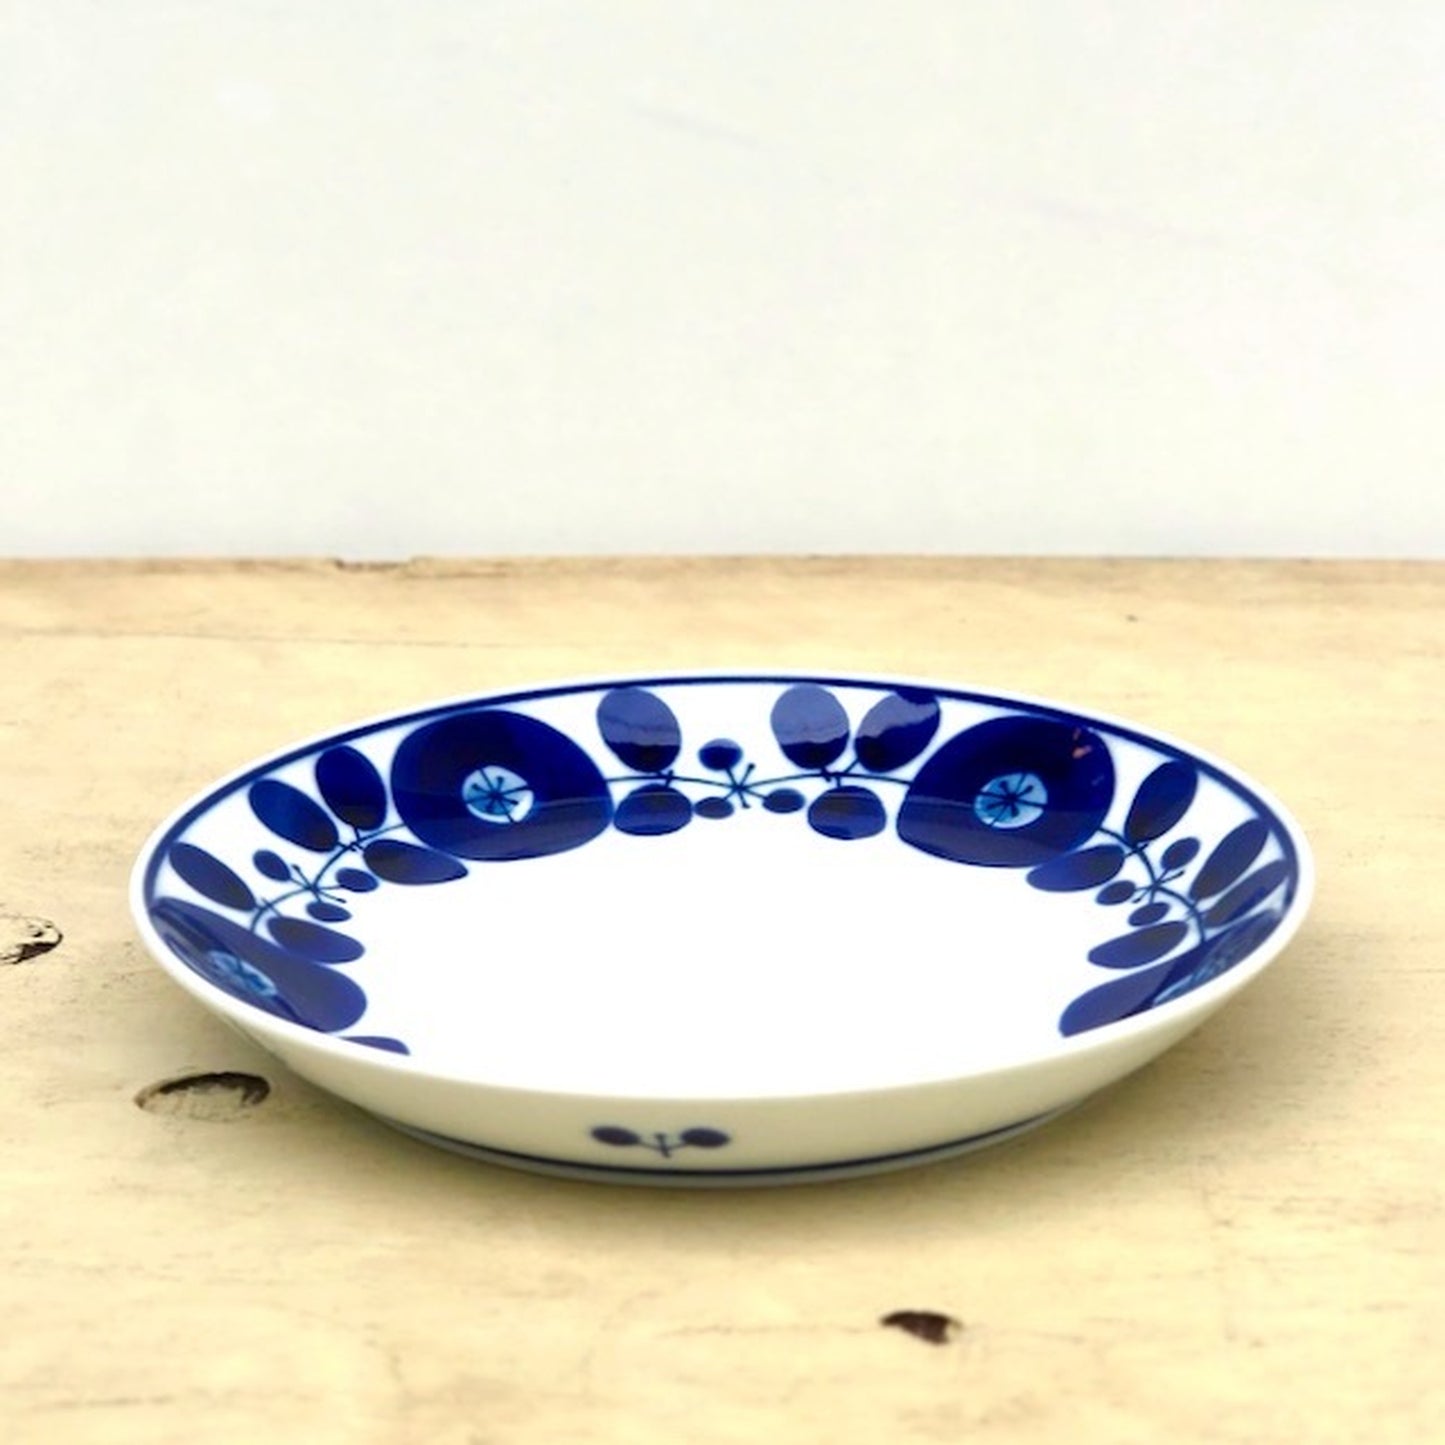 [Hasami ware] [Hakusan pottery] [Bloom] [Plate] [Wreath] [S] [Sold individually] Scandinavian style tableware plate stylish cute